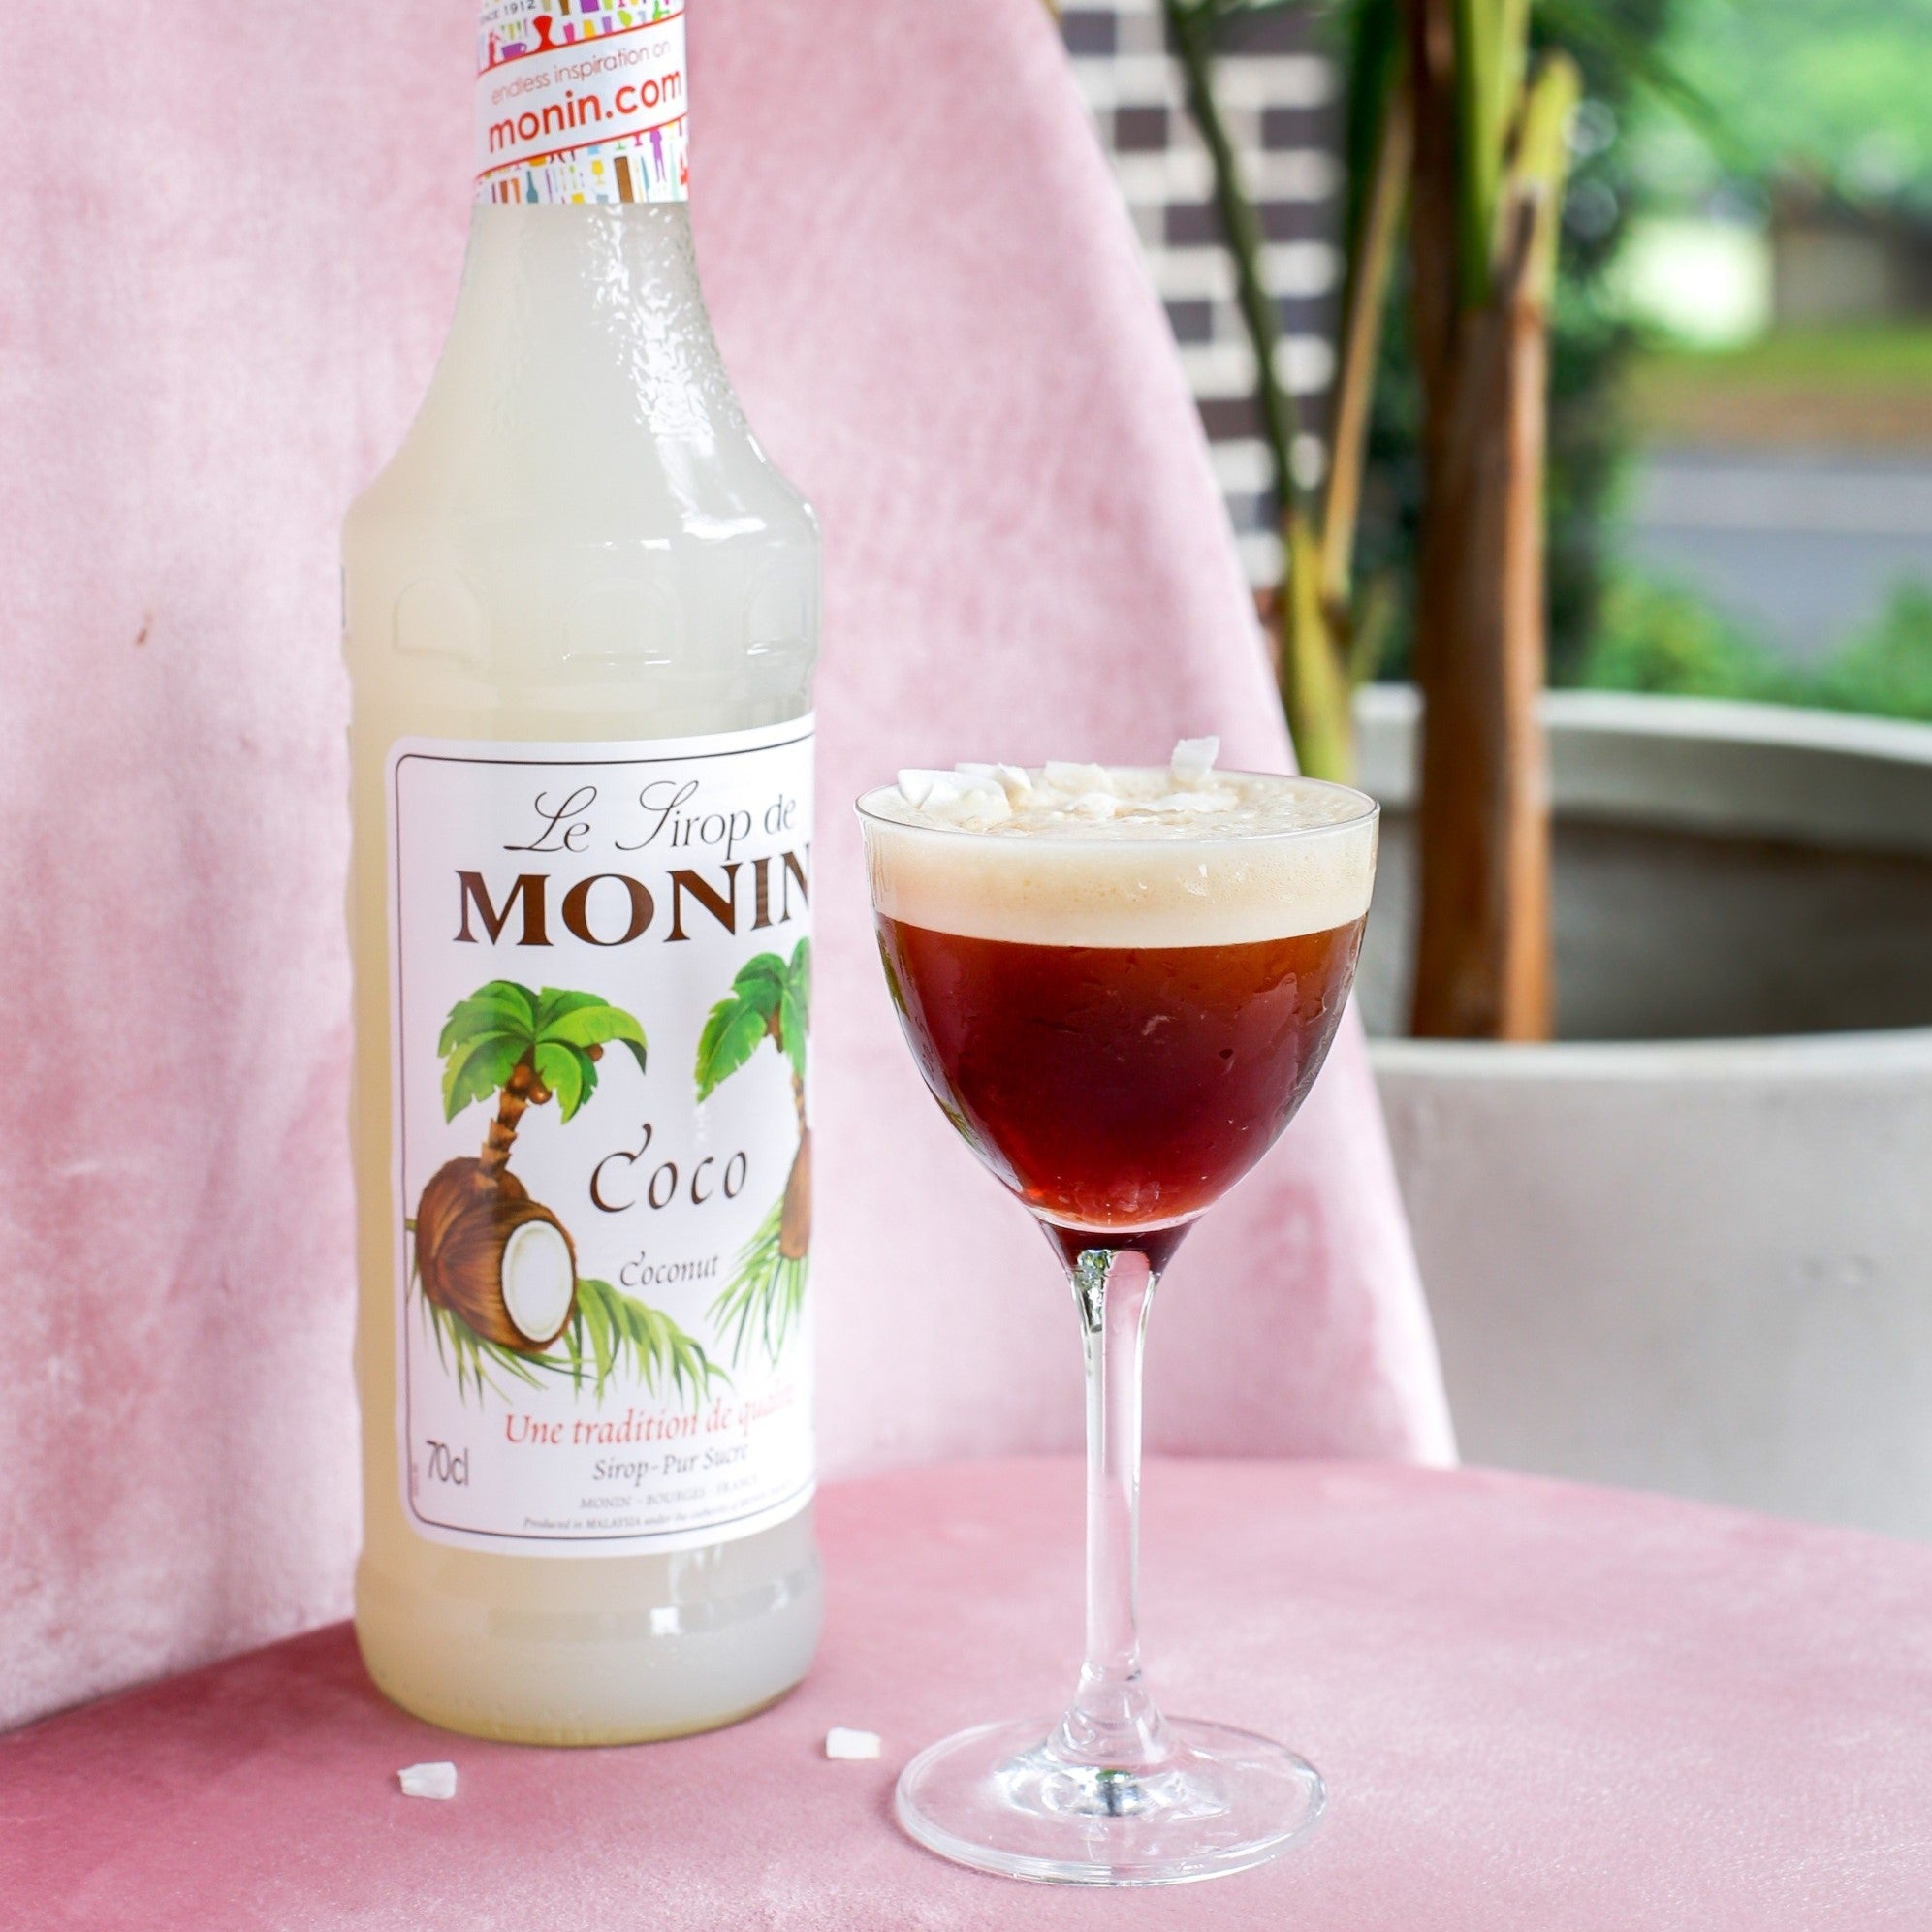 Monin Coconut Syrup 700ml (Box of 6)